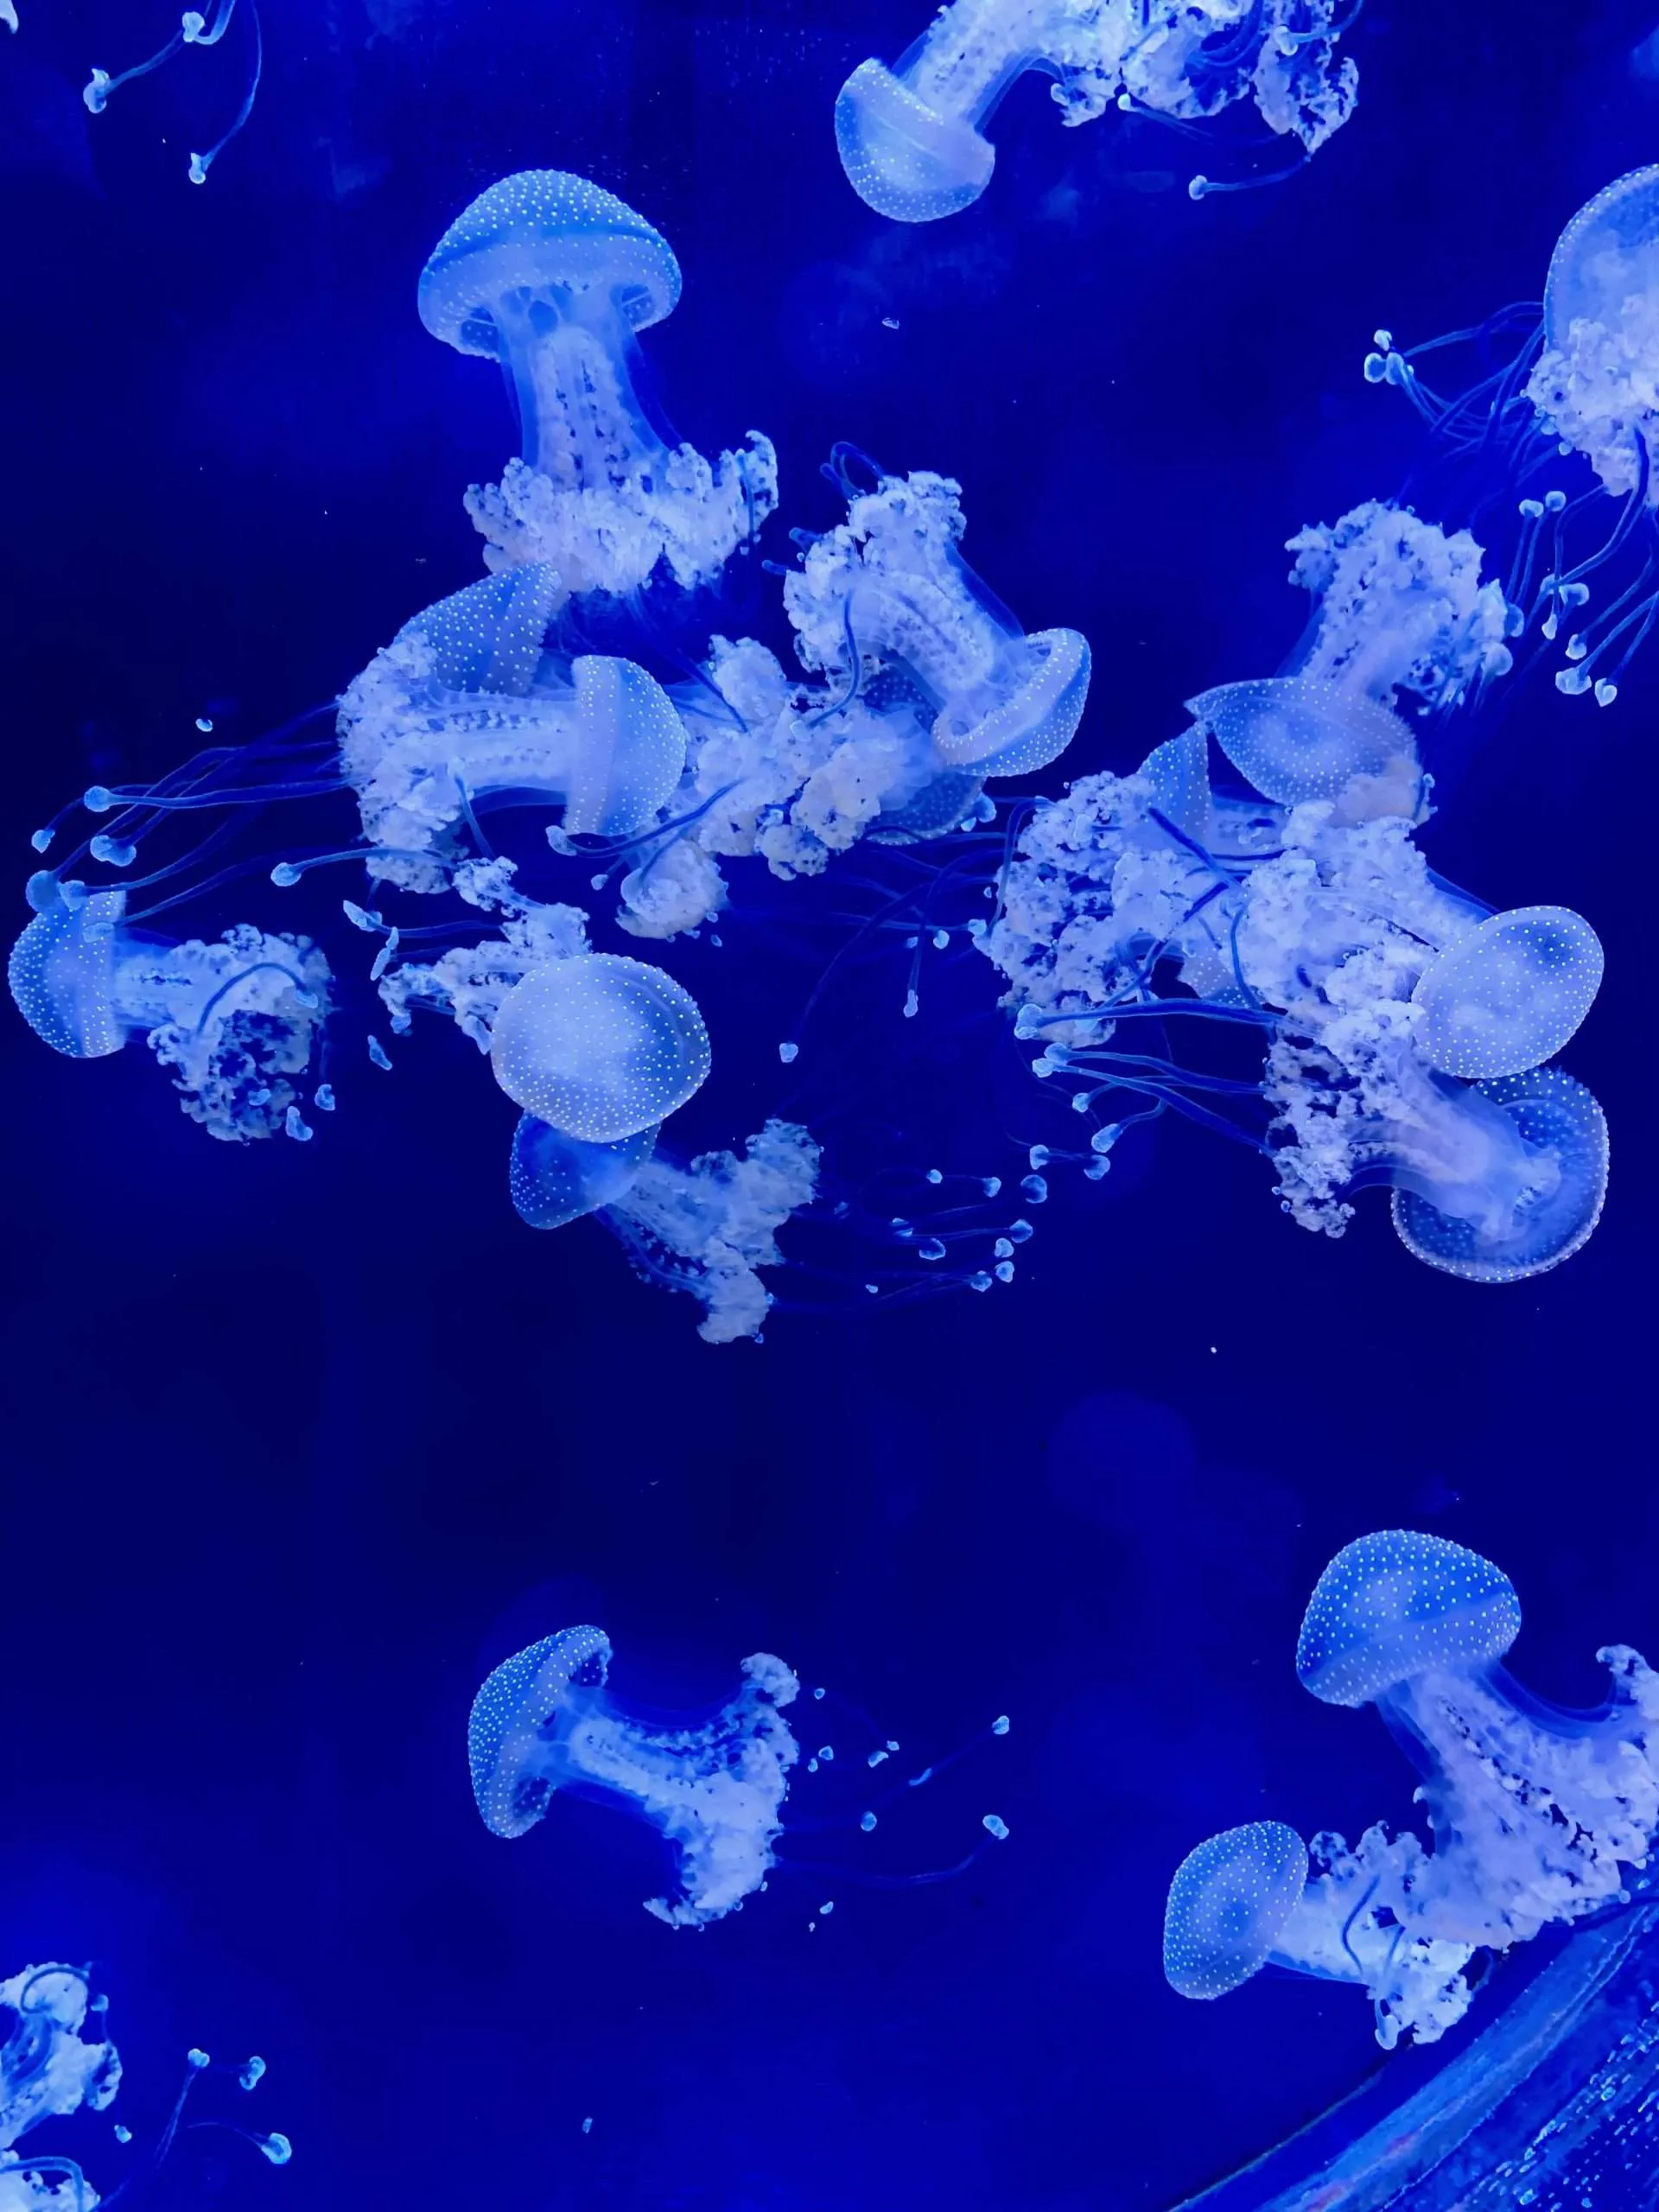 white spotted jellyfish inside an aquarium tank